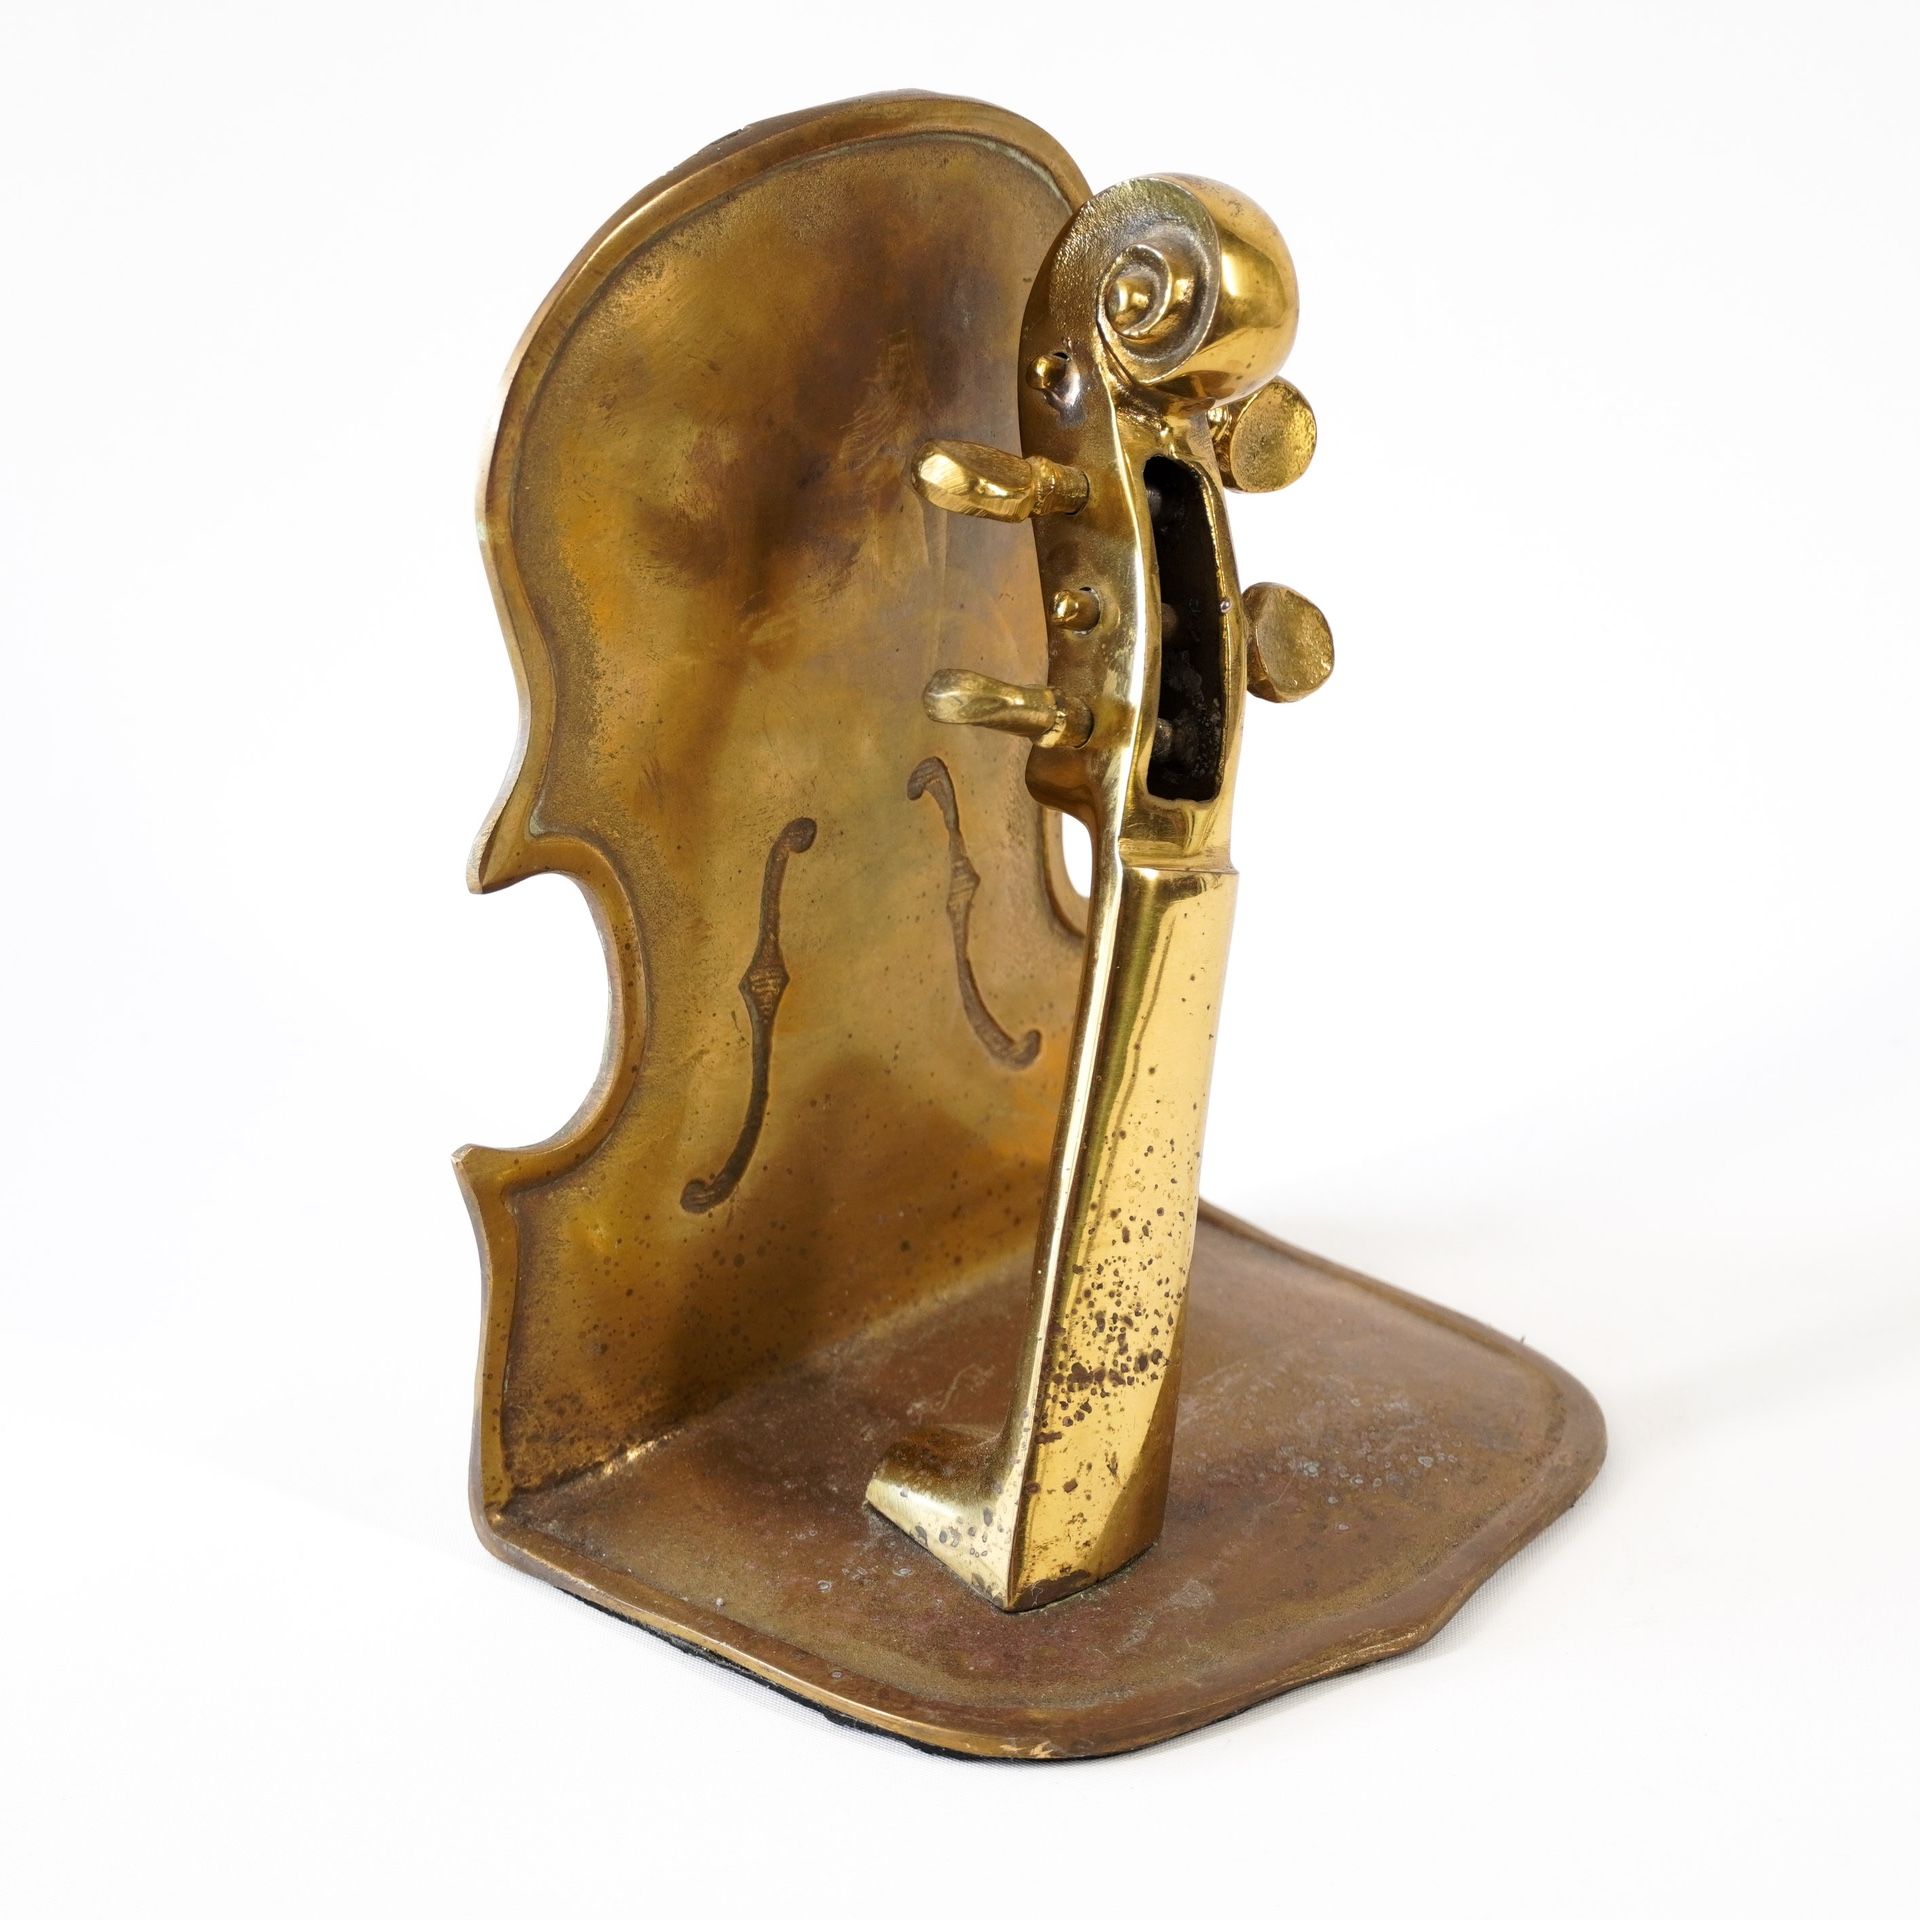 7"x5" Bronze Metal Music Violin Cello String Instrument Book End Sculpture Decor